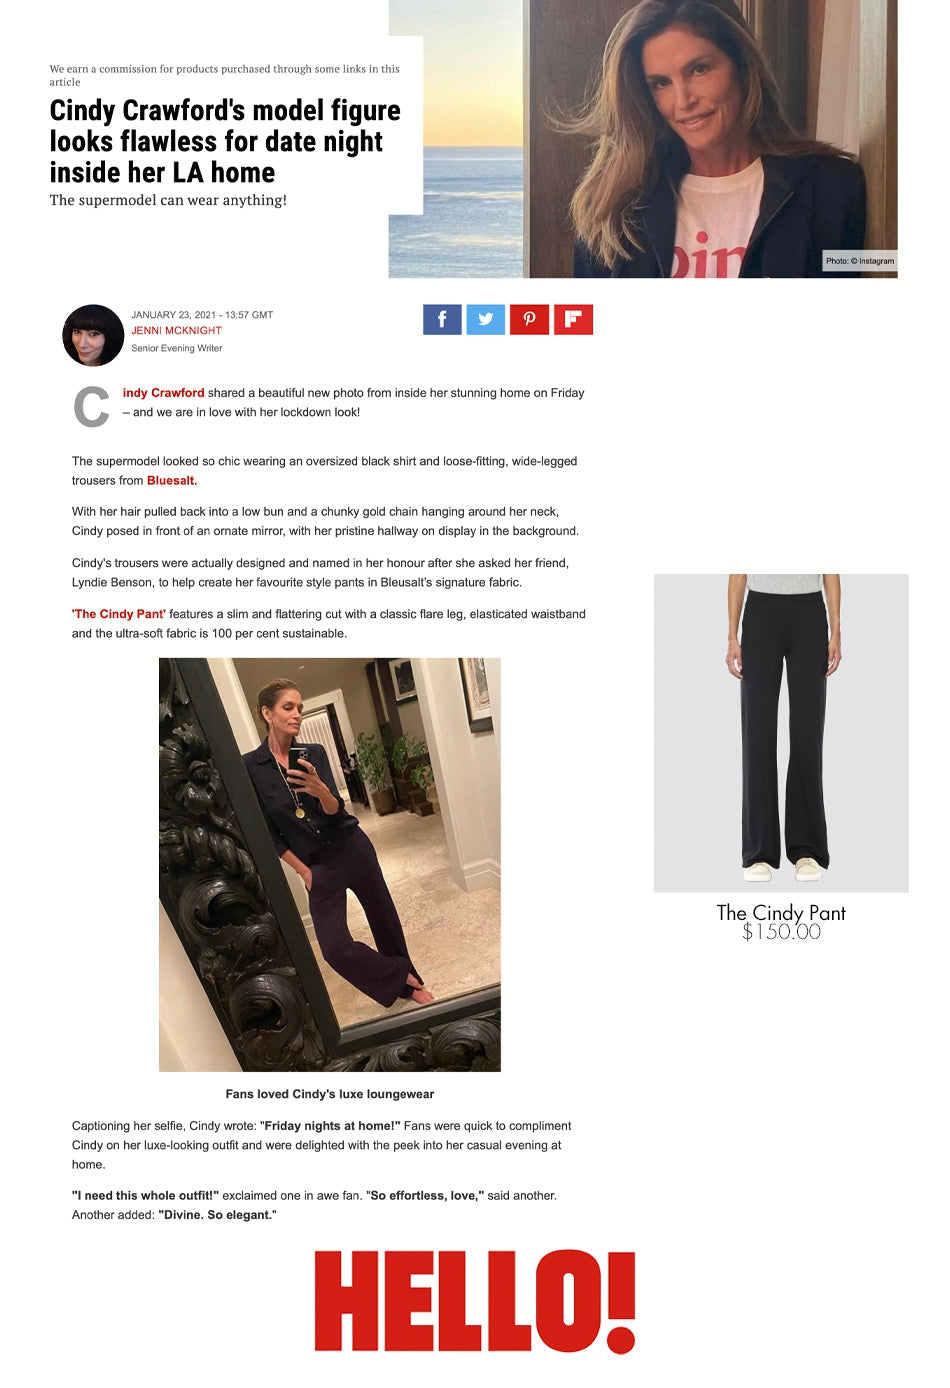 Cindy Crawford's model figure looks flawless for date night inside her LA home-Bleusalt